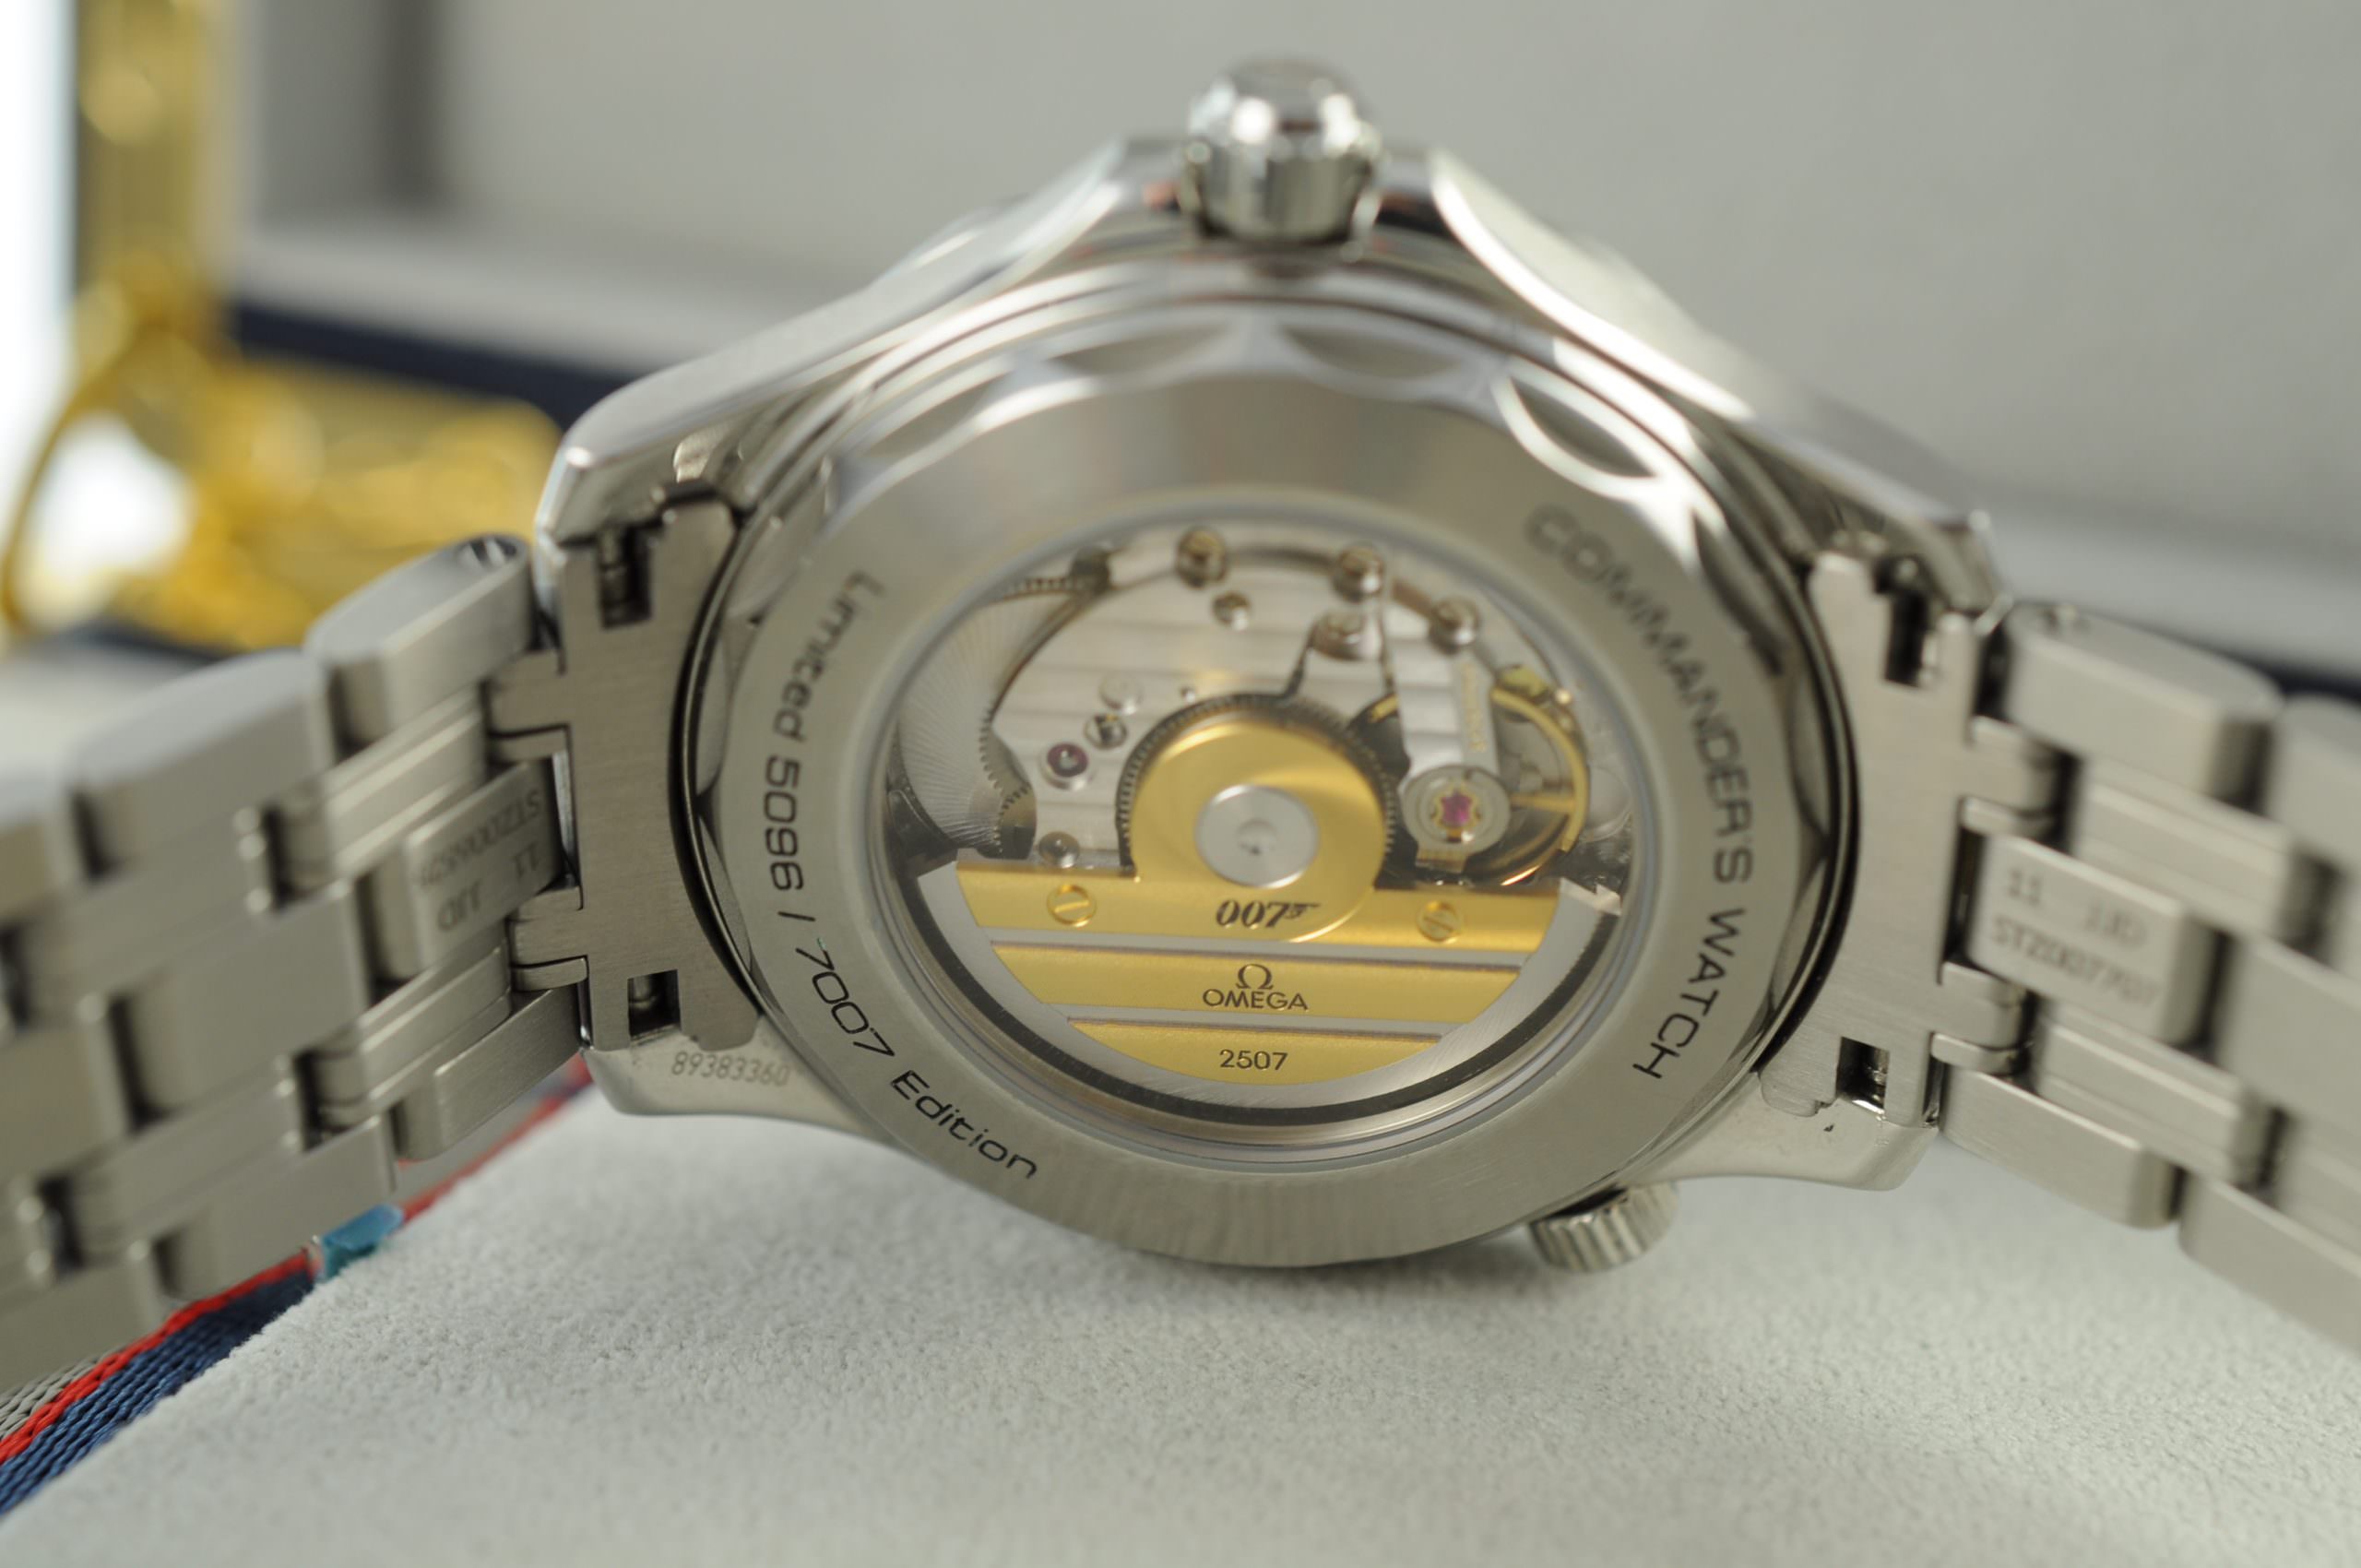 Omega Seamaster 007 Commander's Watch Ltd Edition - Edinburgh Watch Company